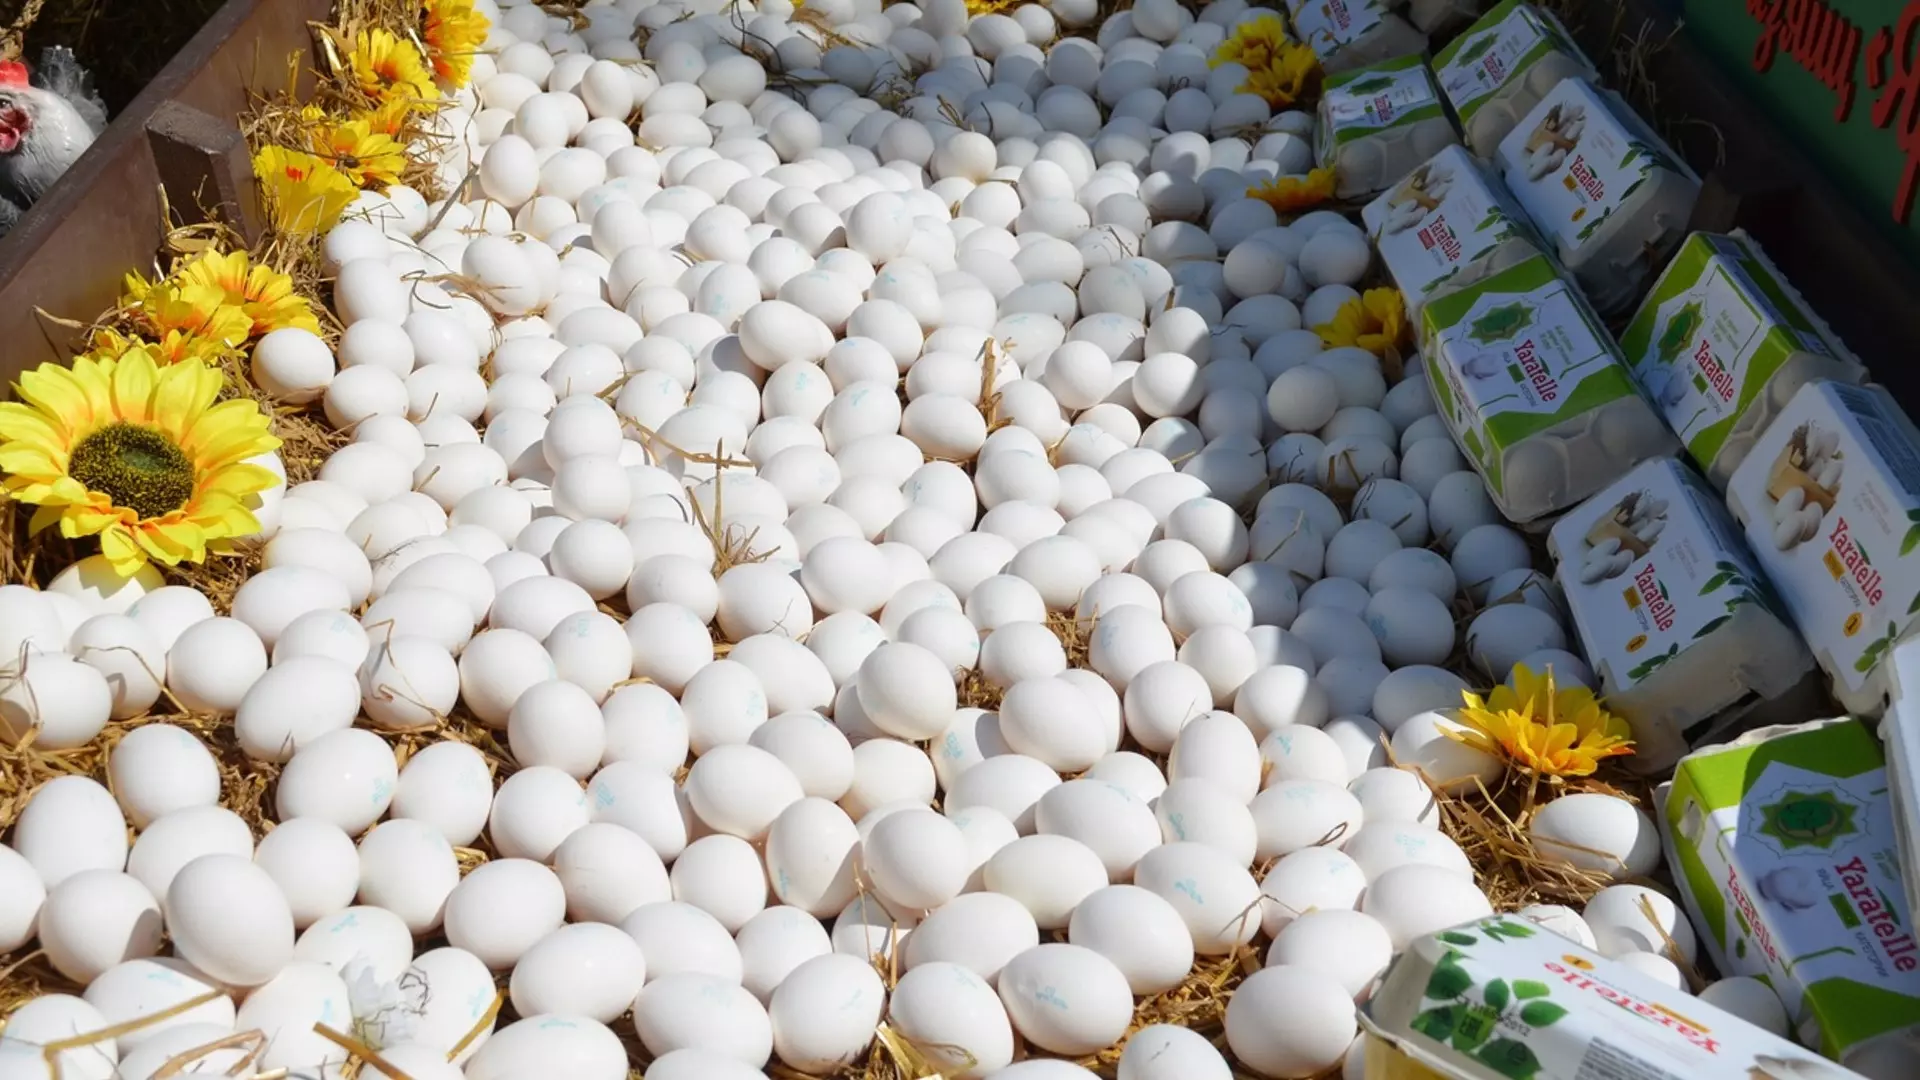 Политолог Журавлев прокомментировал импорт яиц из Турции и Азербайджана